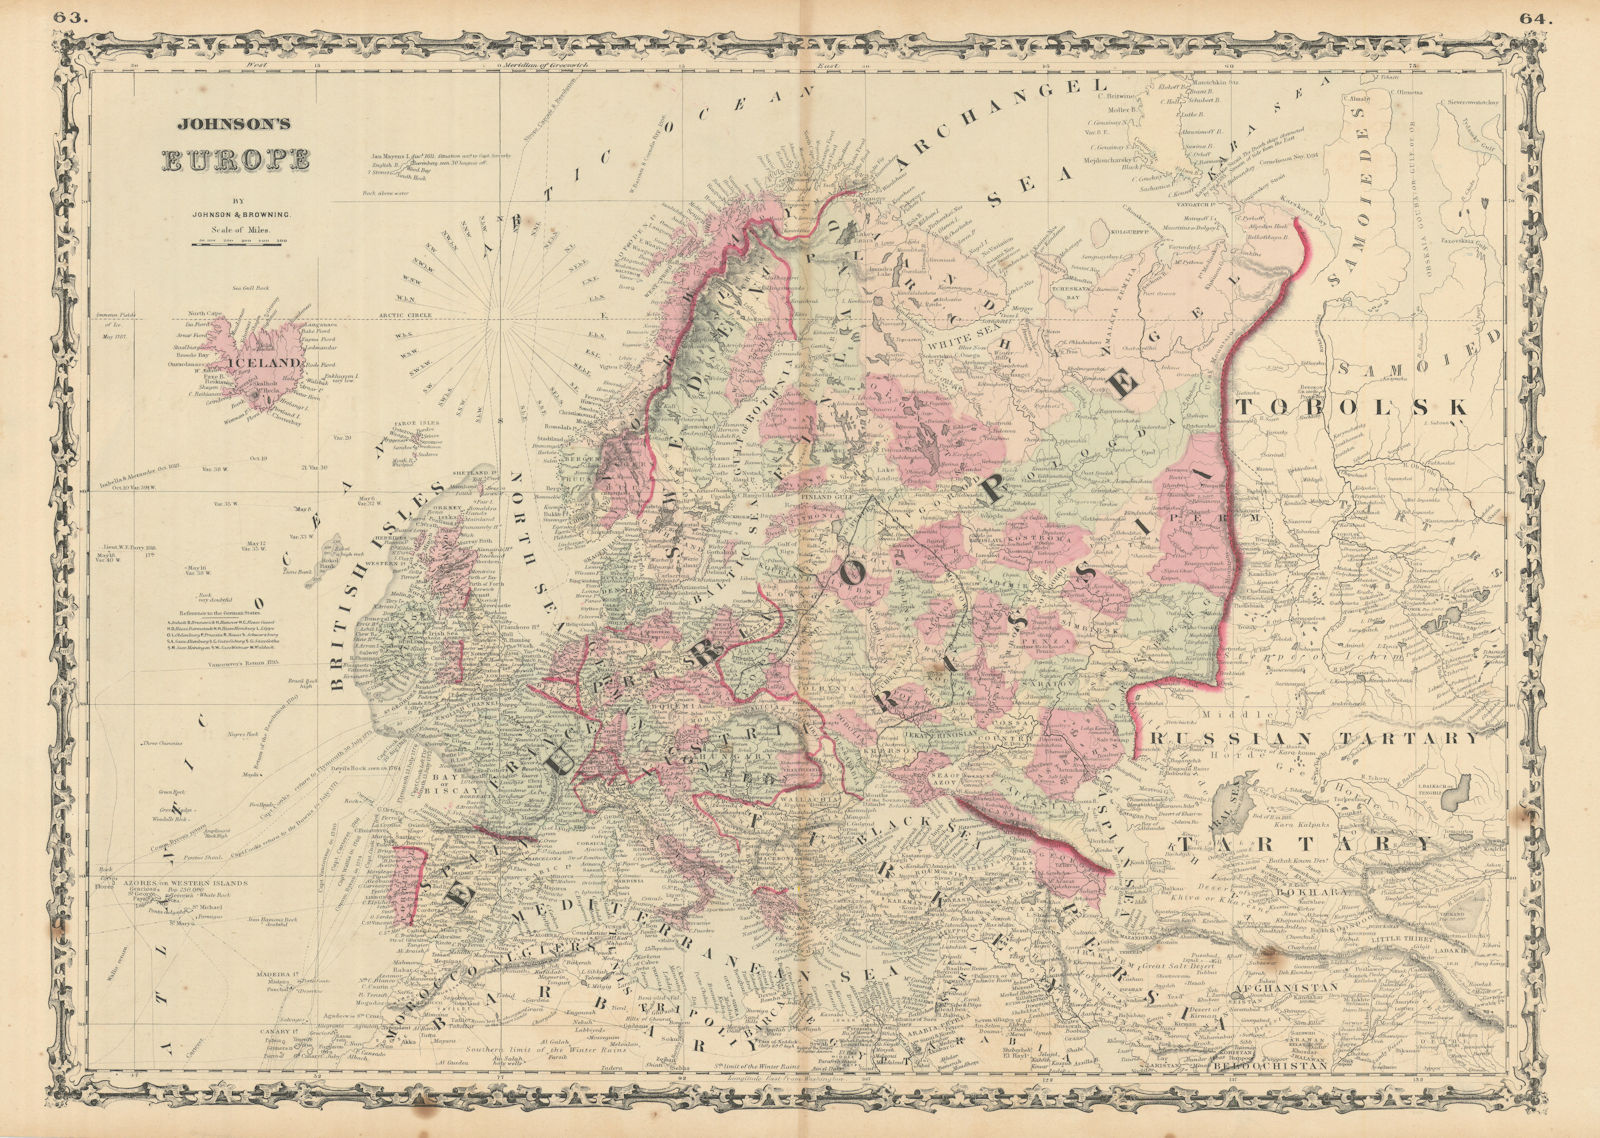 Johnson's Europe. Navigators' routes. Continental Shelf 1861 old antique map